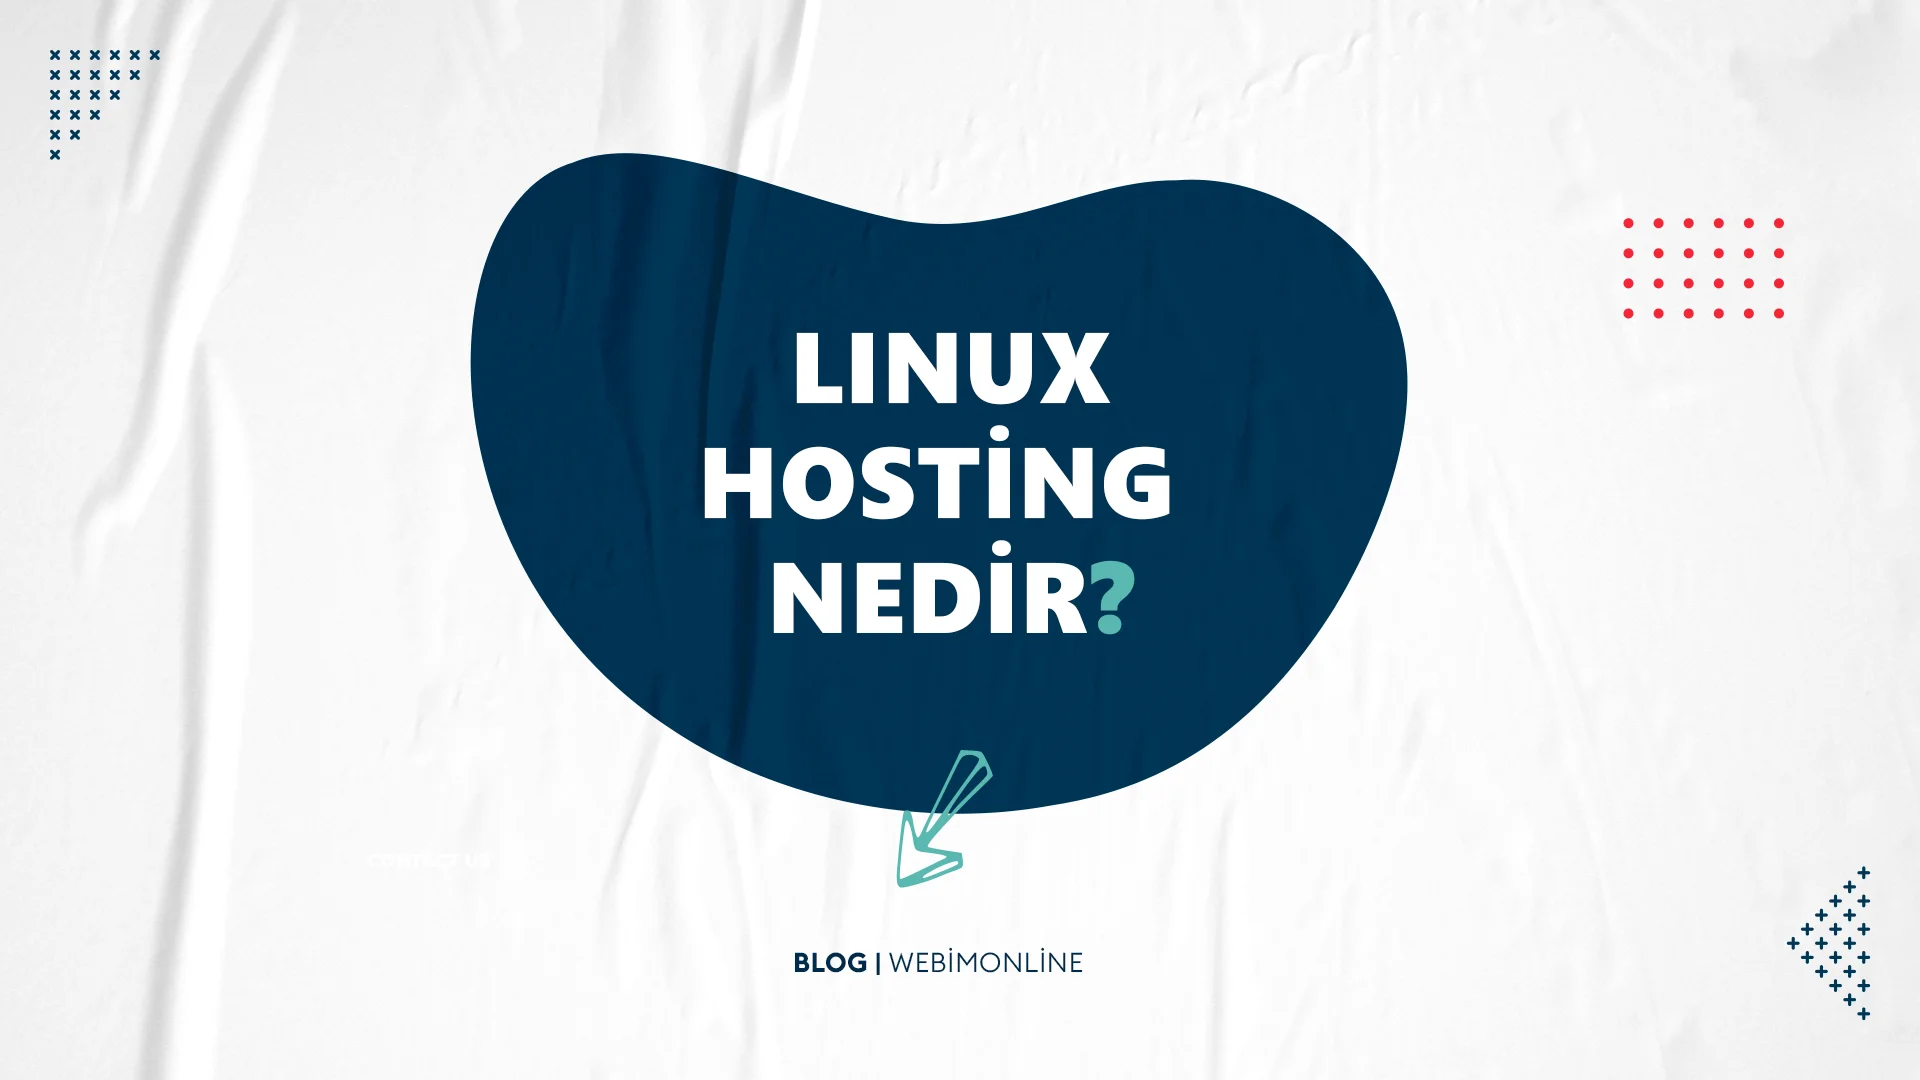 Linux Hosting Nedir?